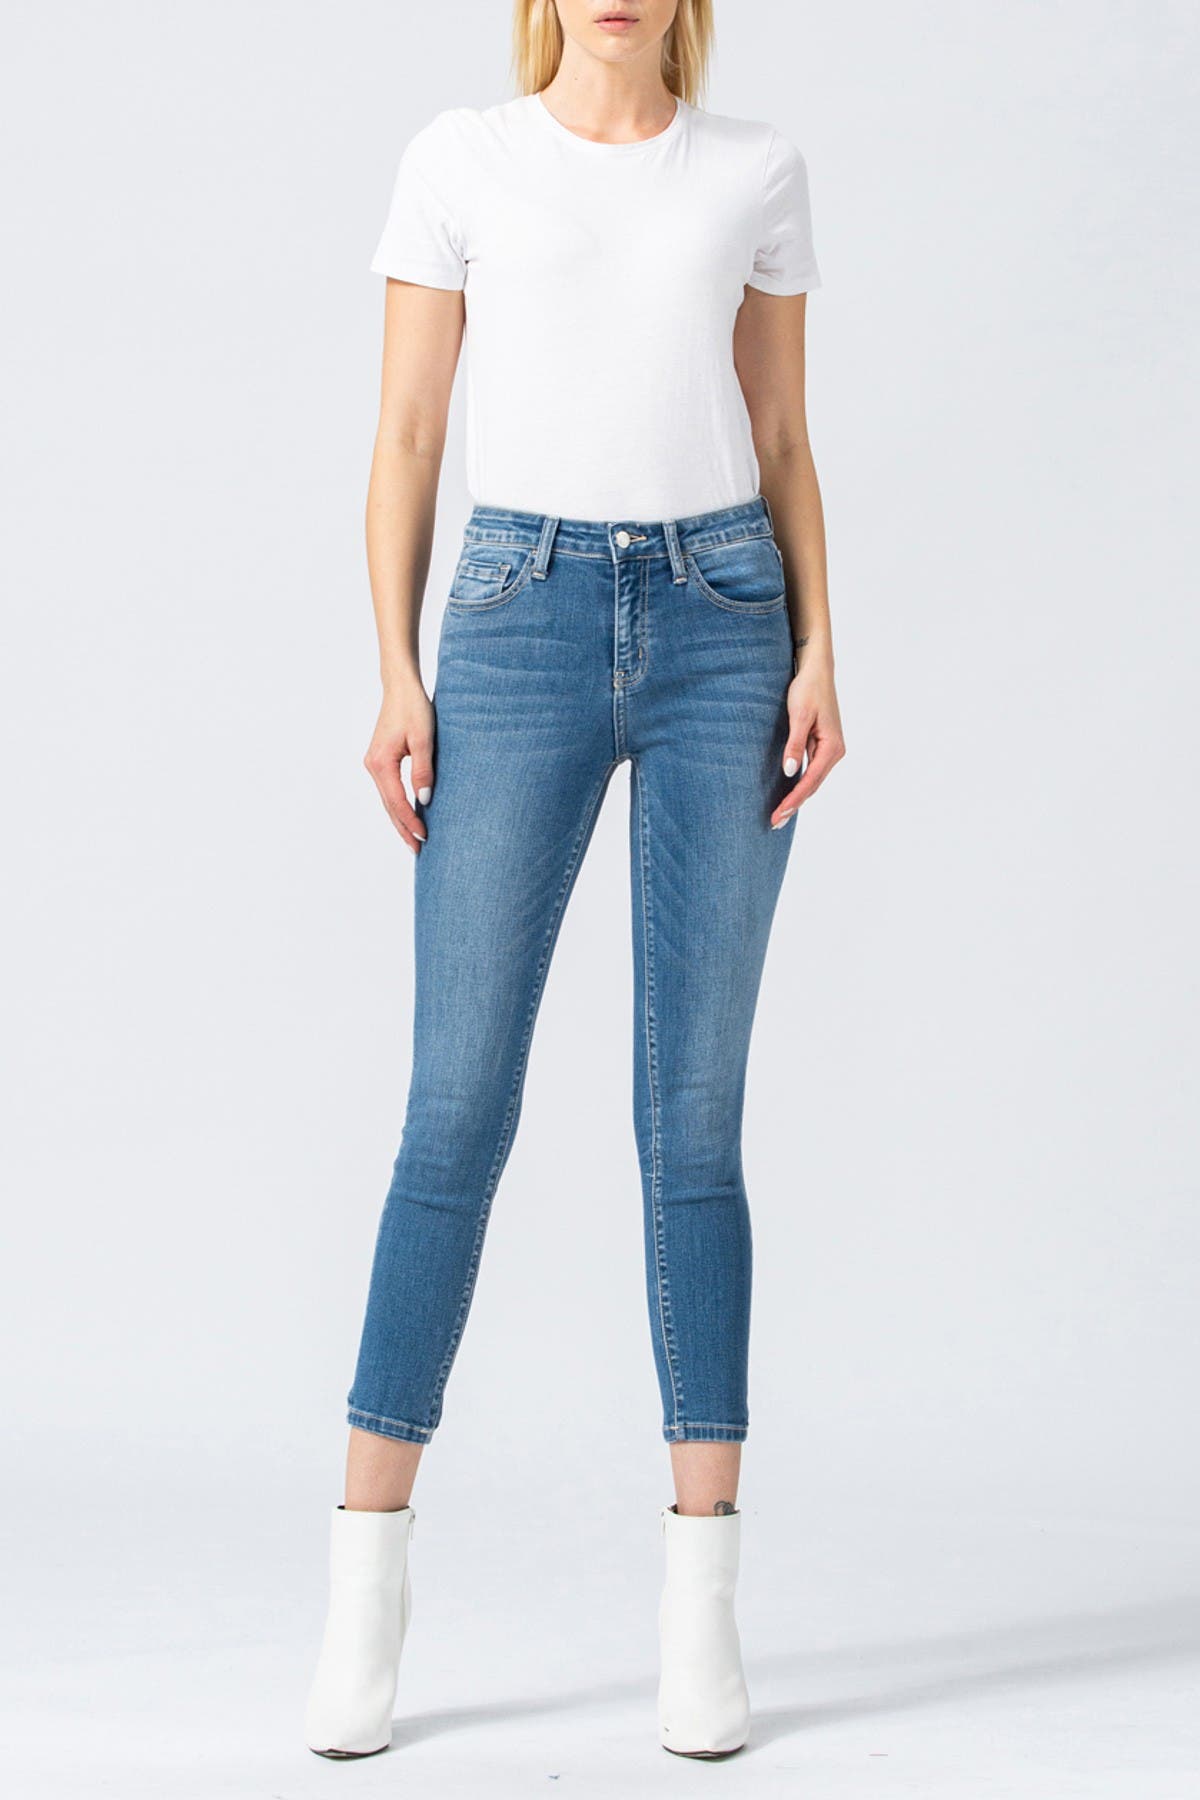 VERVET BY FLYING MONKEY | Amber Crop Mid Rise Skinny Jeans | Nordstrom Rack